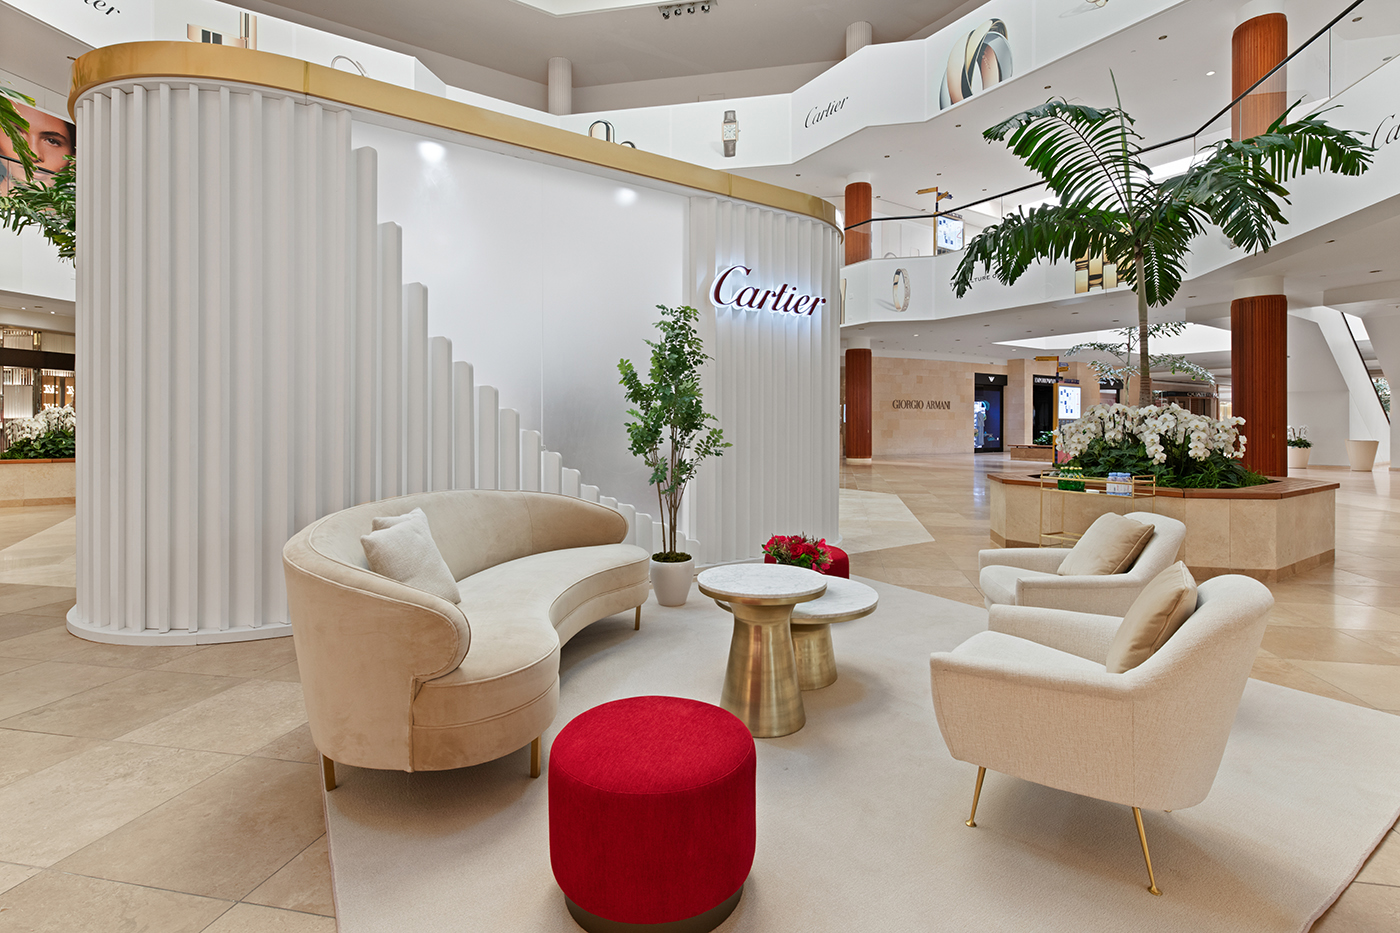 Visit Louis Vuitton's Pop-Up at South Coast Plaza - Orange Coast Mag